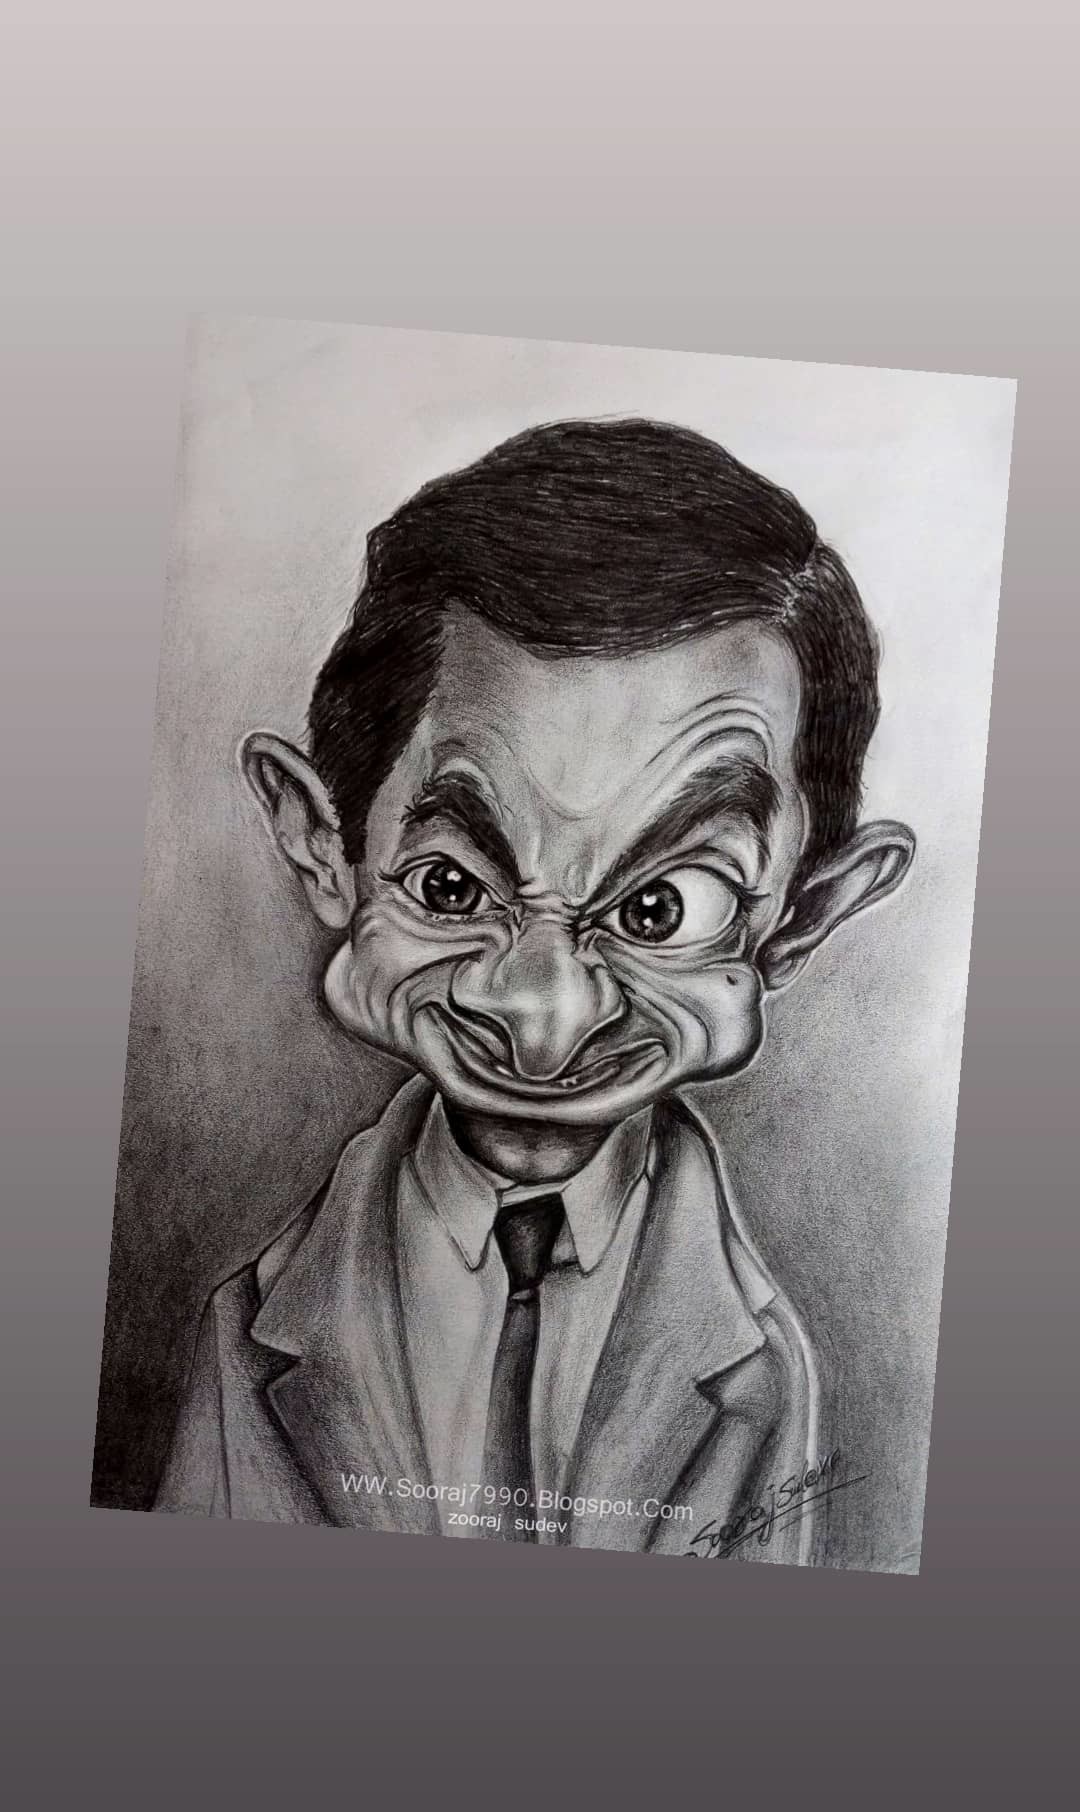 Mr Bean by IamLesFleurs on DeviantArt